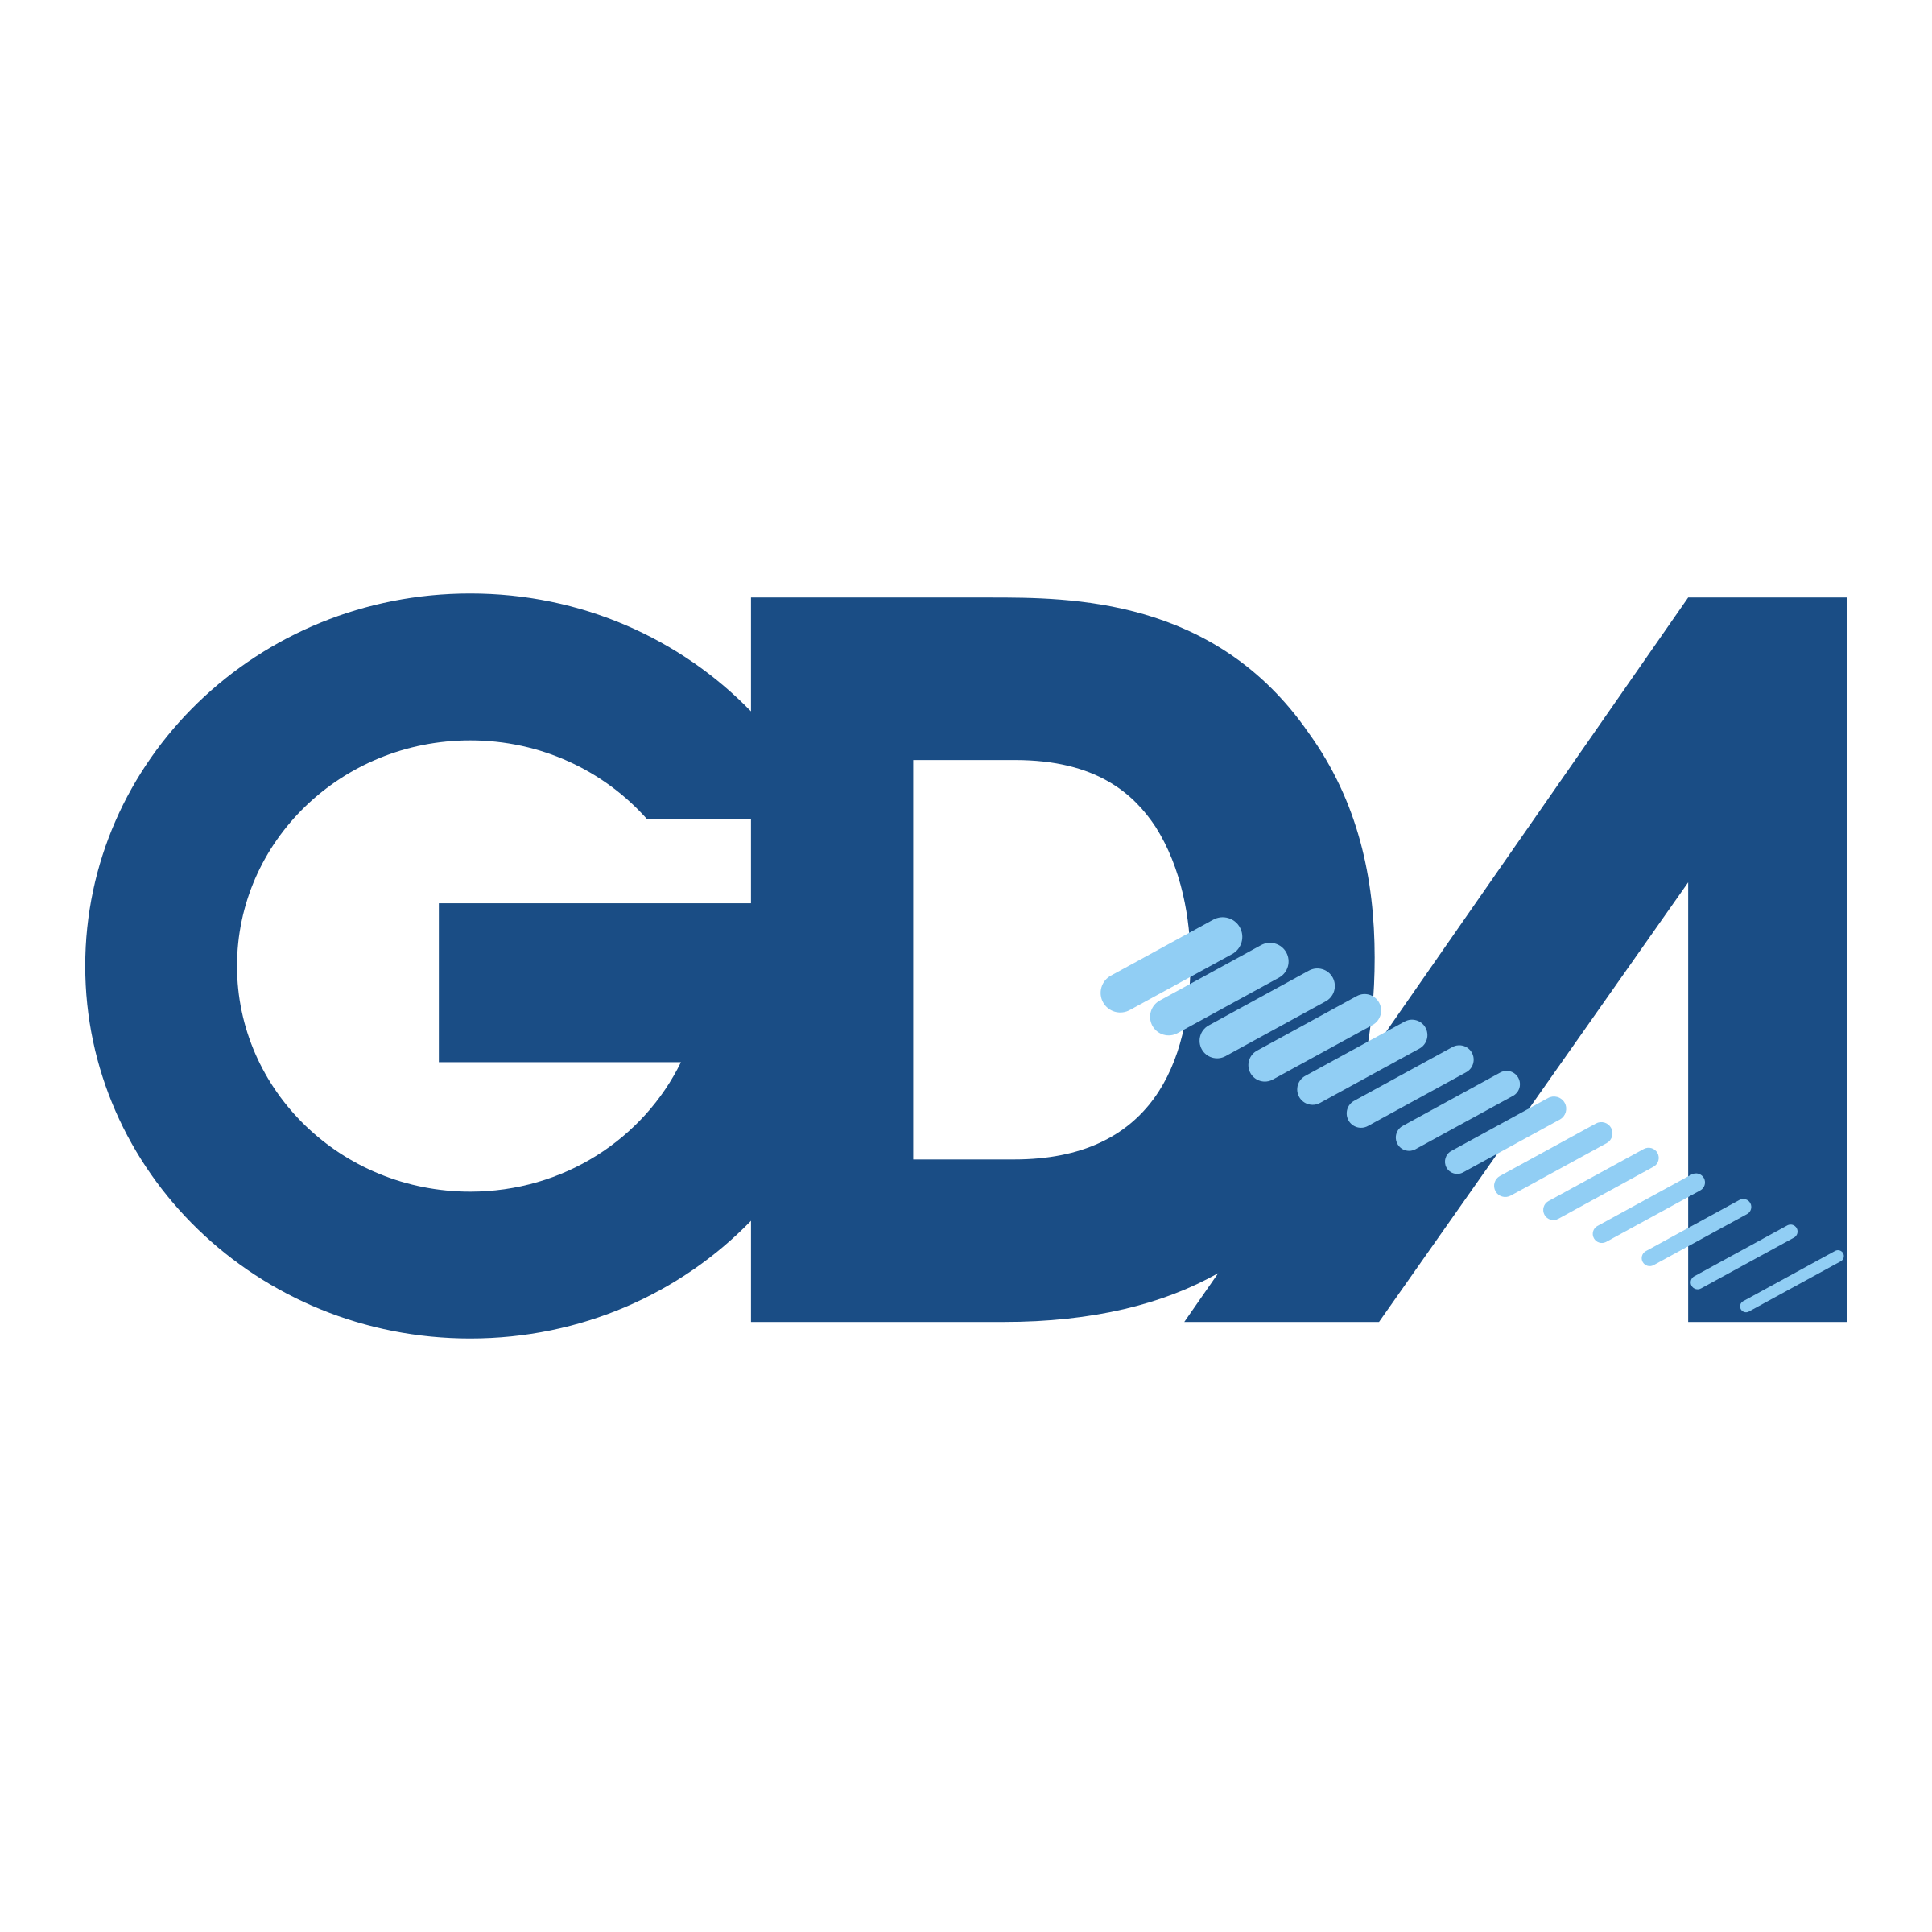 GDA Logo - GDA Logo PNG Transparent & SVG Vector - Freebie Supply